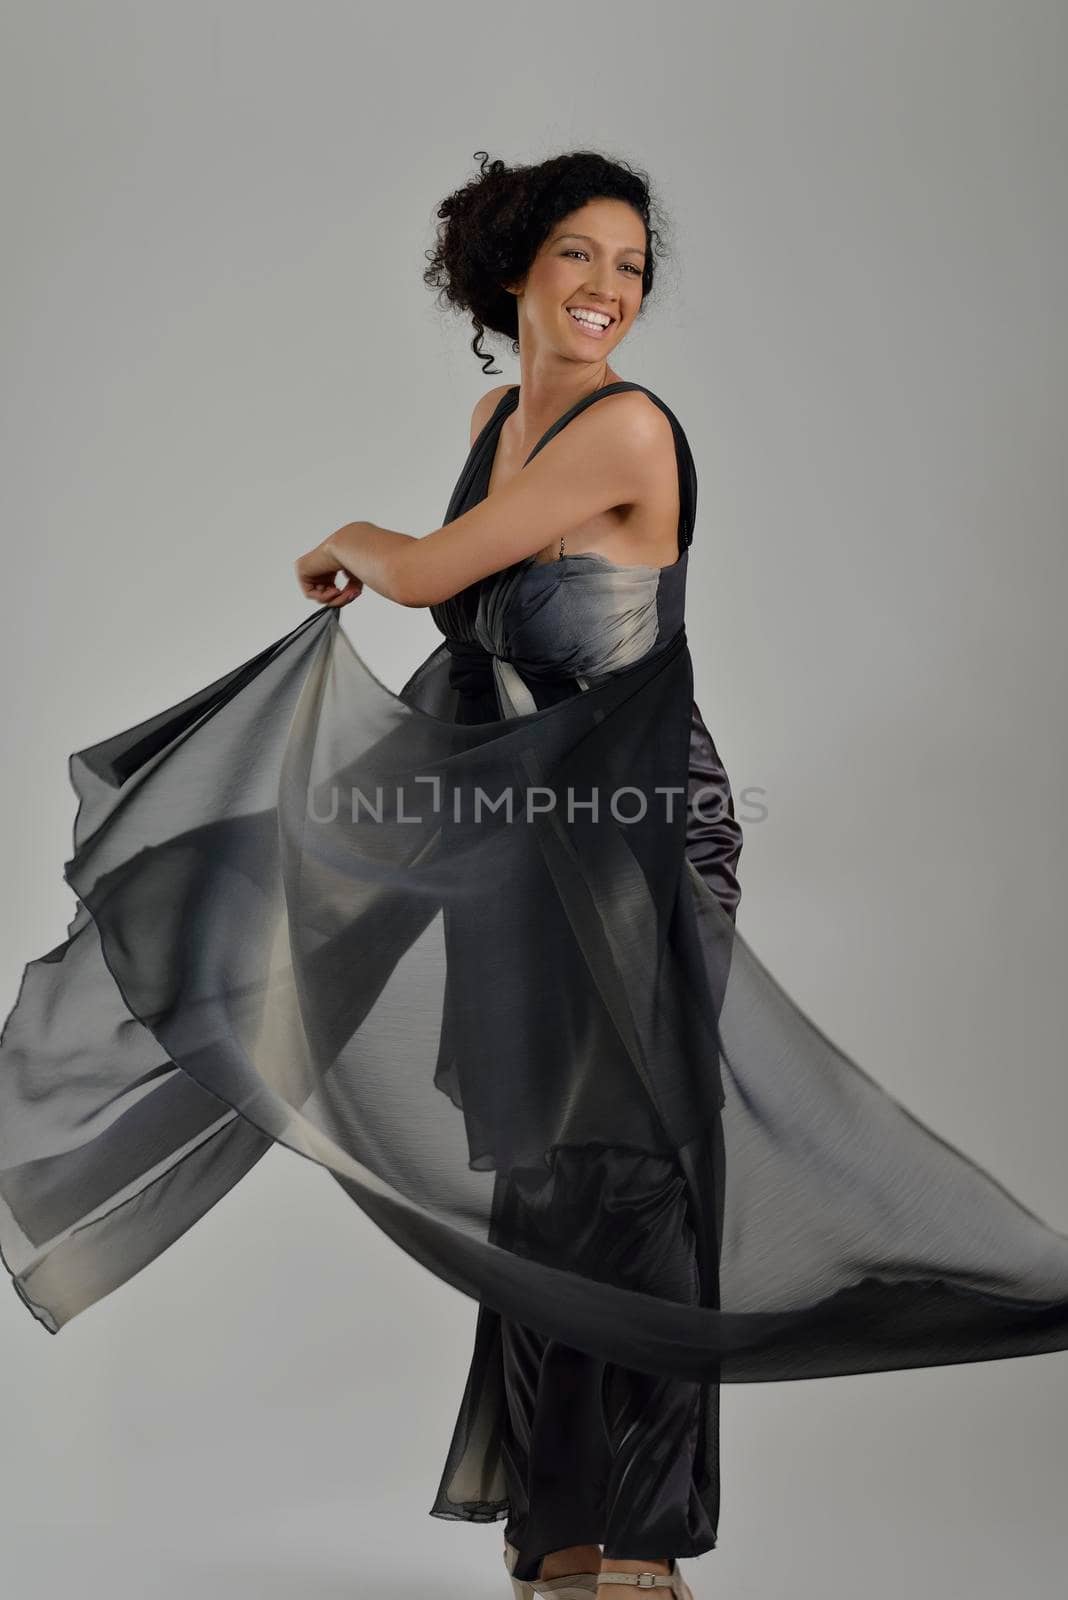 elegant woman in fashionable dress posing in the studio by dotshock